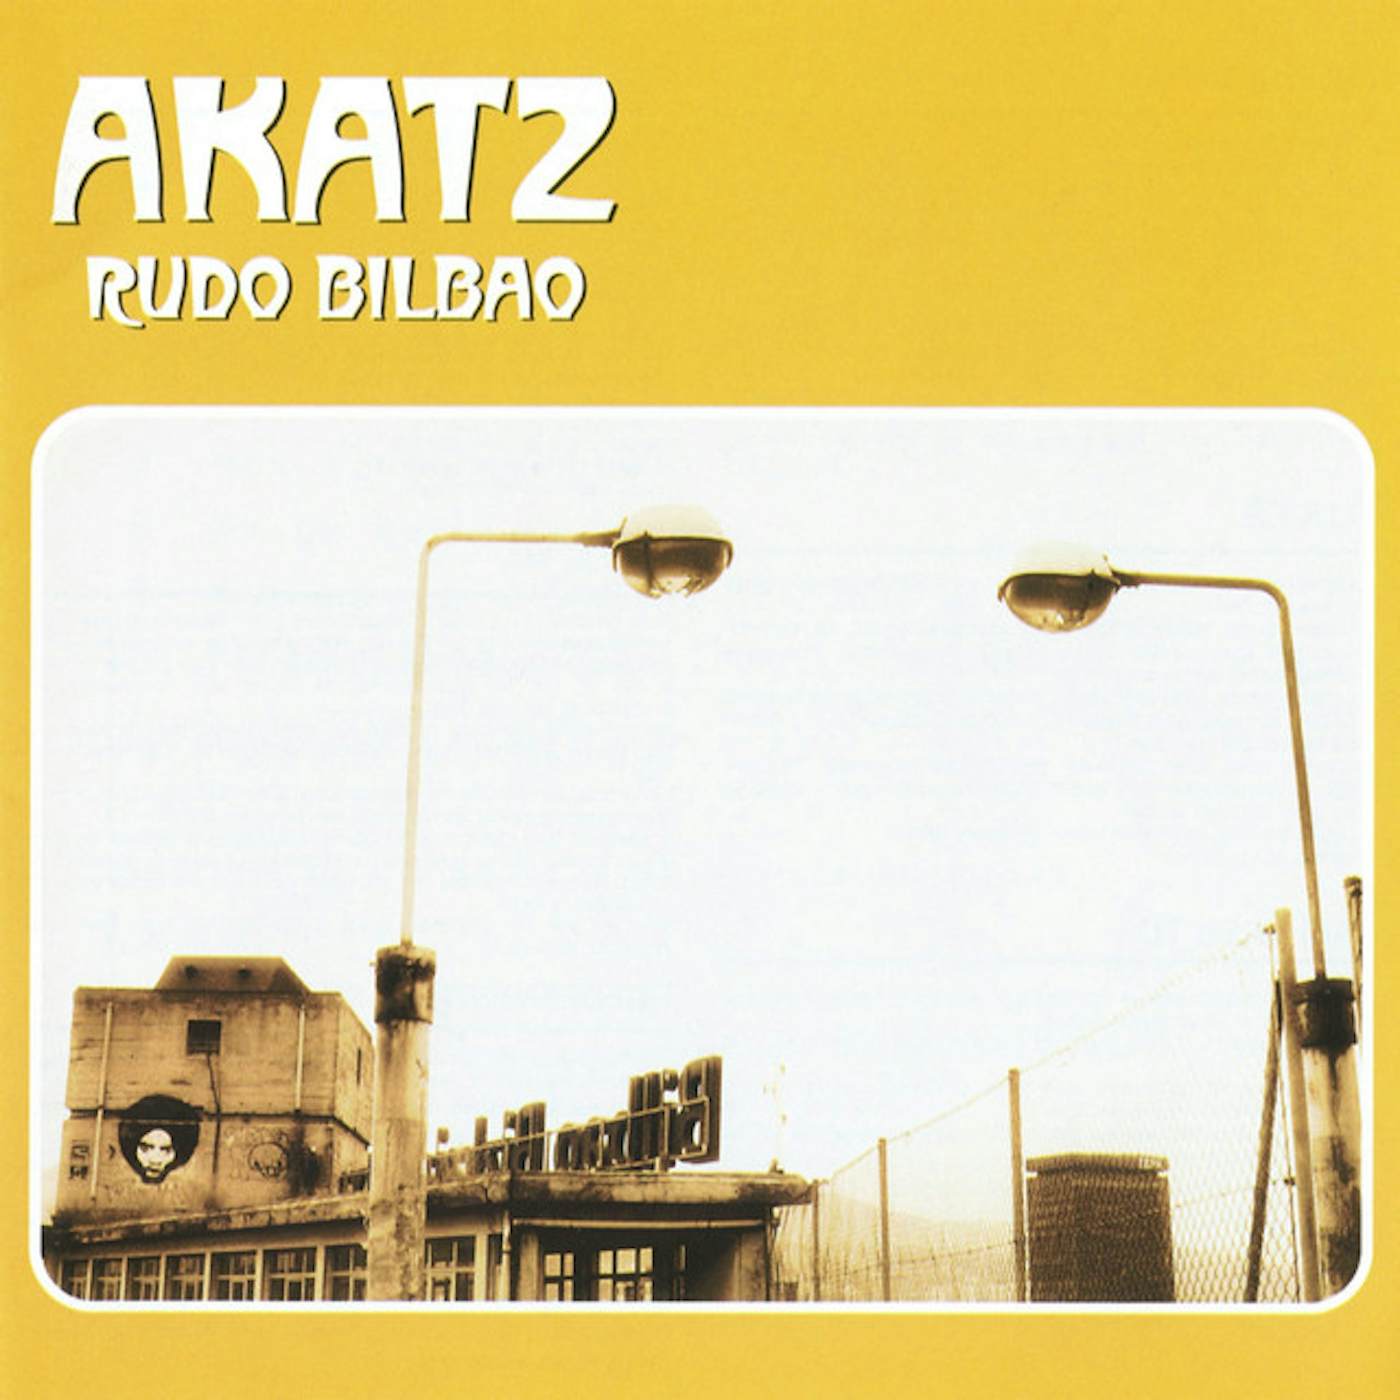 Akatz Rudo Bilbao Vinyl Record